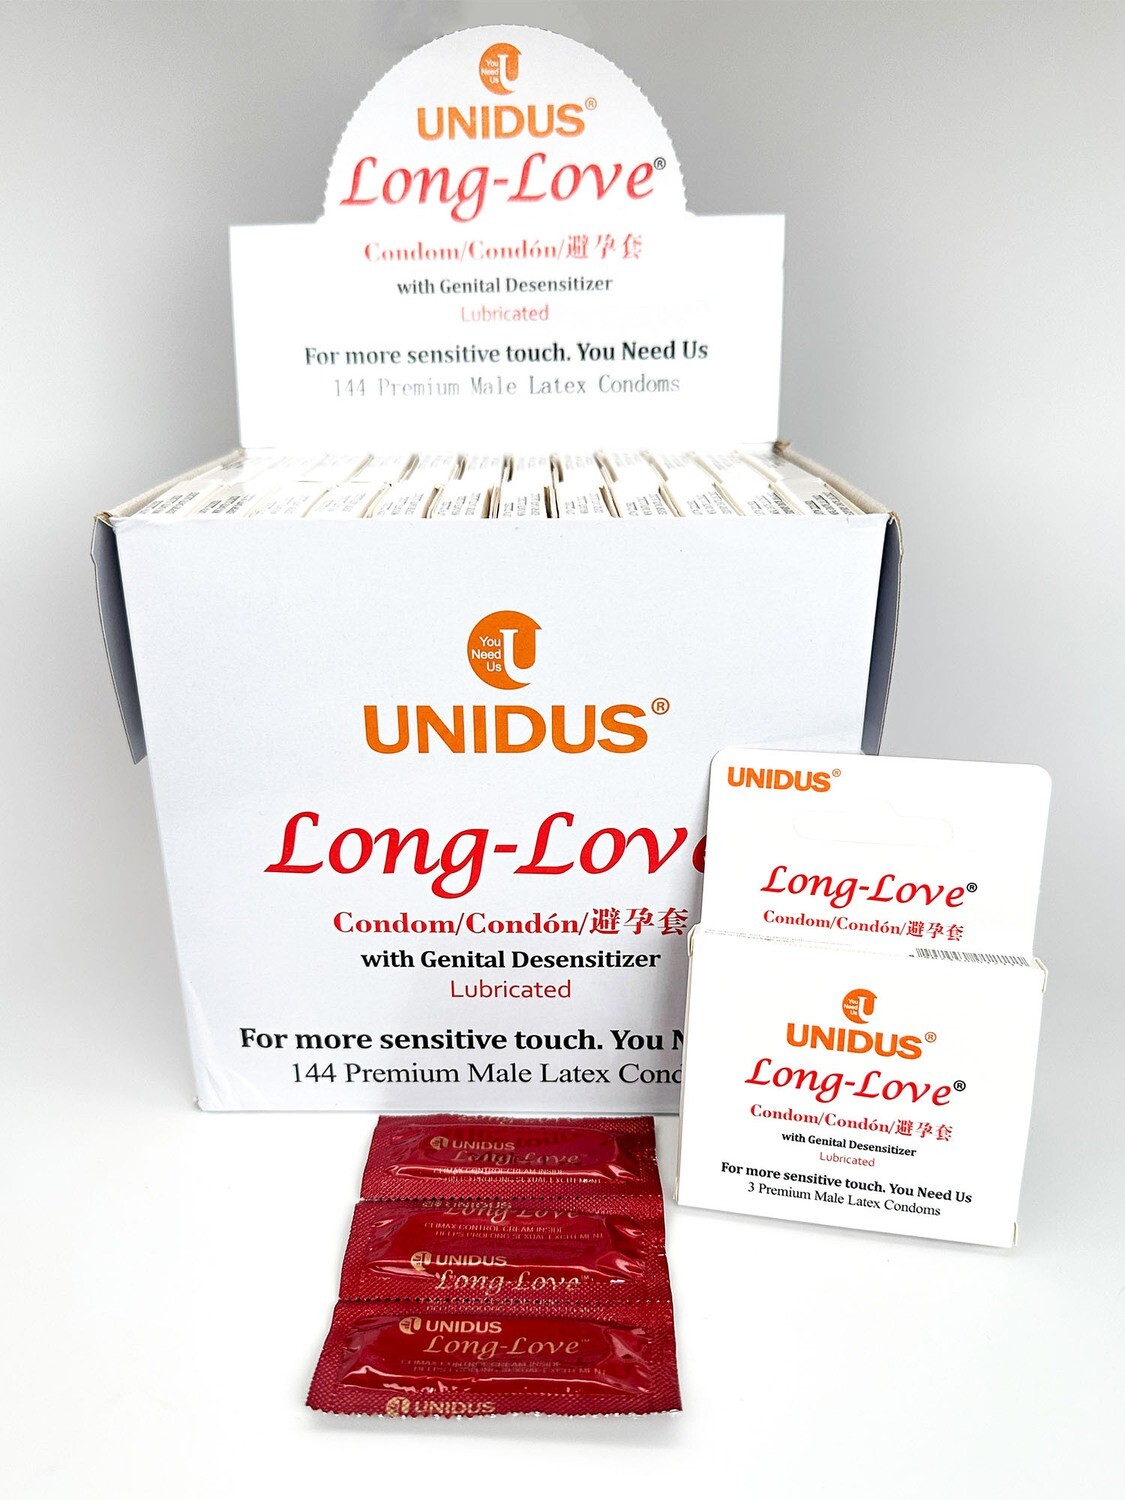 Wholesale - Long Love® Unidus® Condom White Packing - Lot of 1 display case (containing 144 condoms) - Total 144 condoms